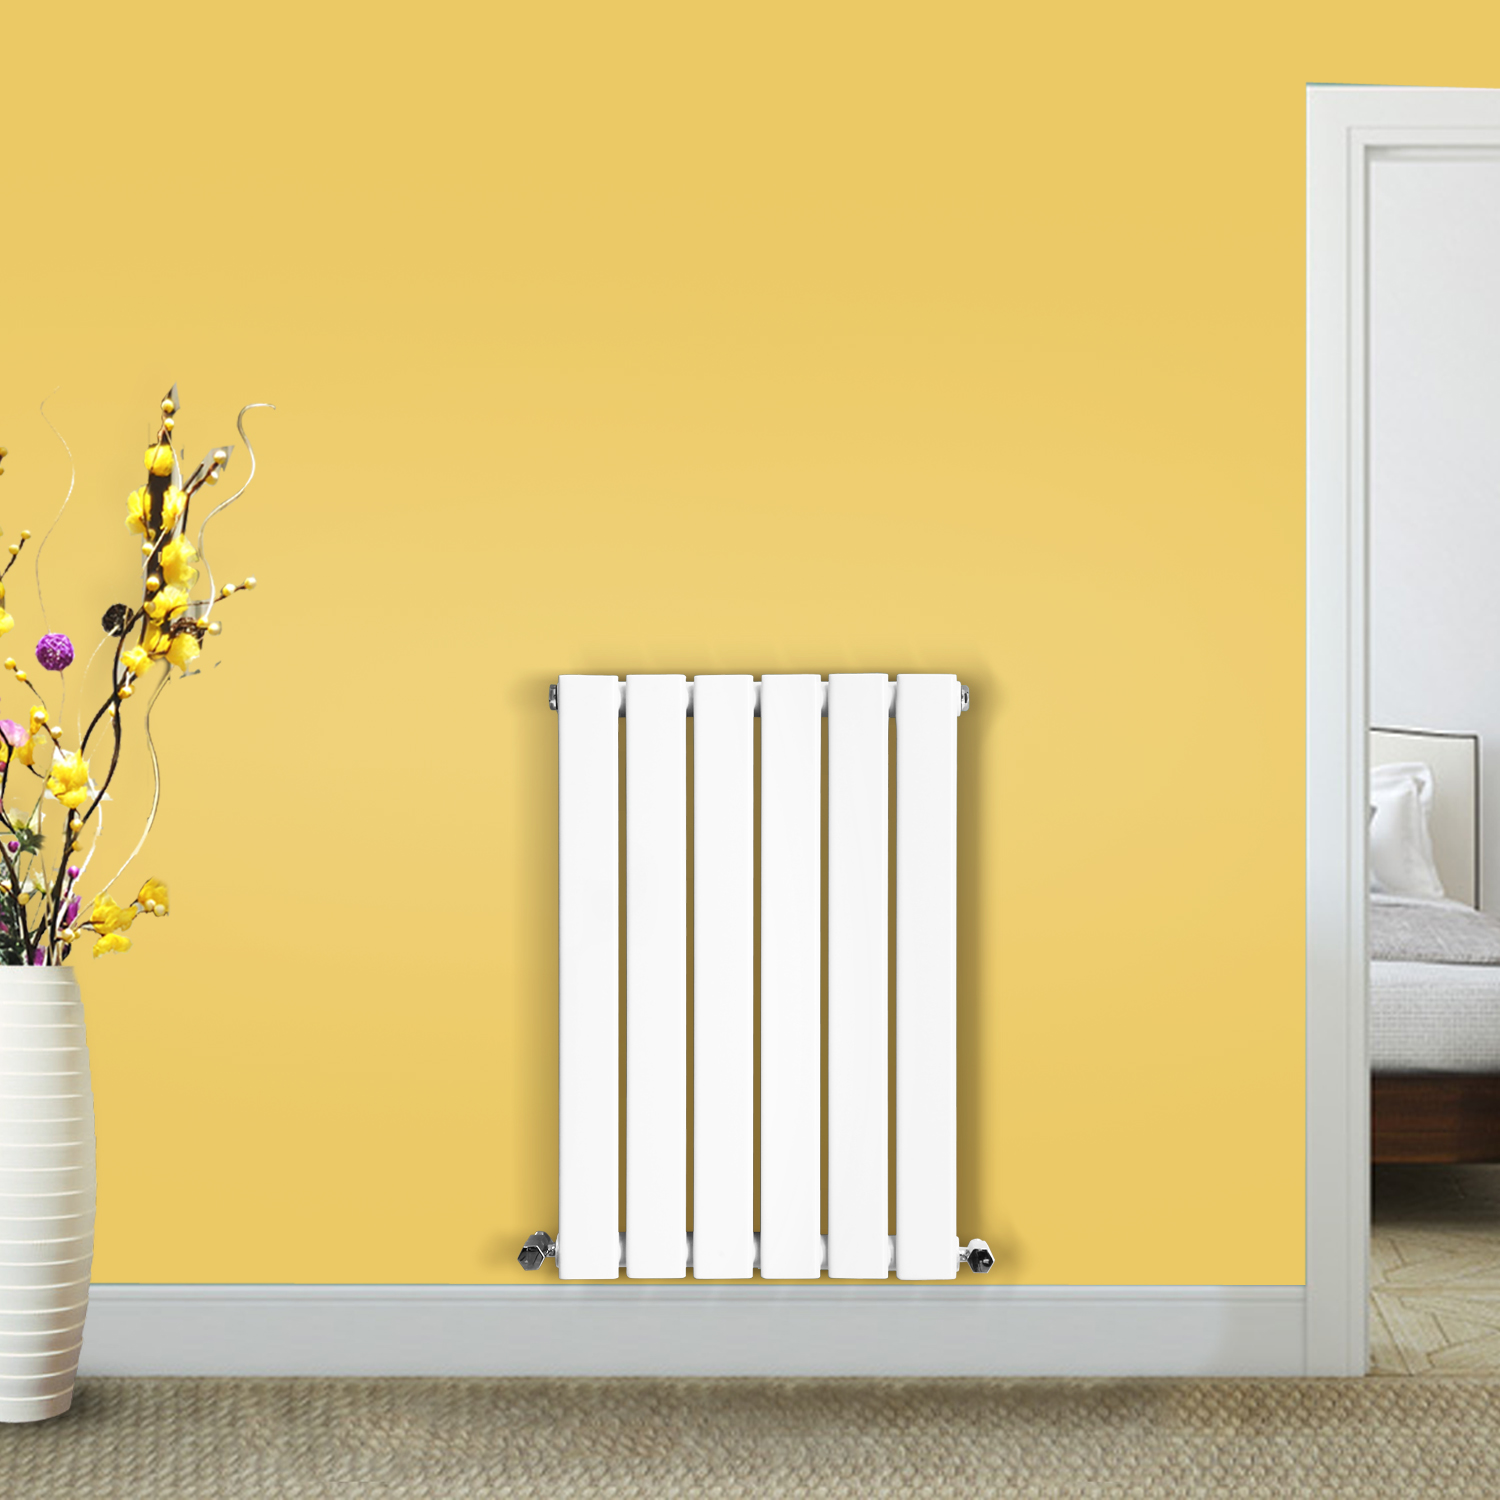 Column Vertical Single радиатор. Home Heat радиаторы 250х600. Панель для радиатора. Радиатор одиночный. Радиатор flat